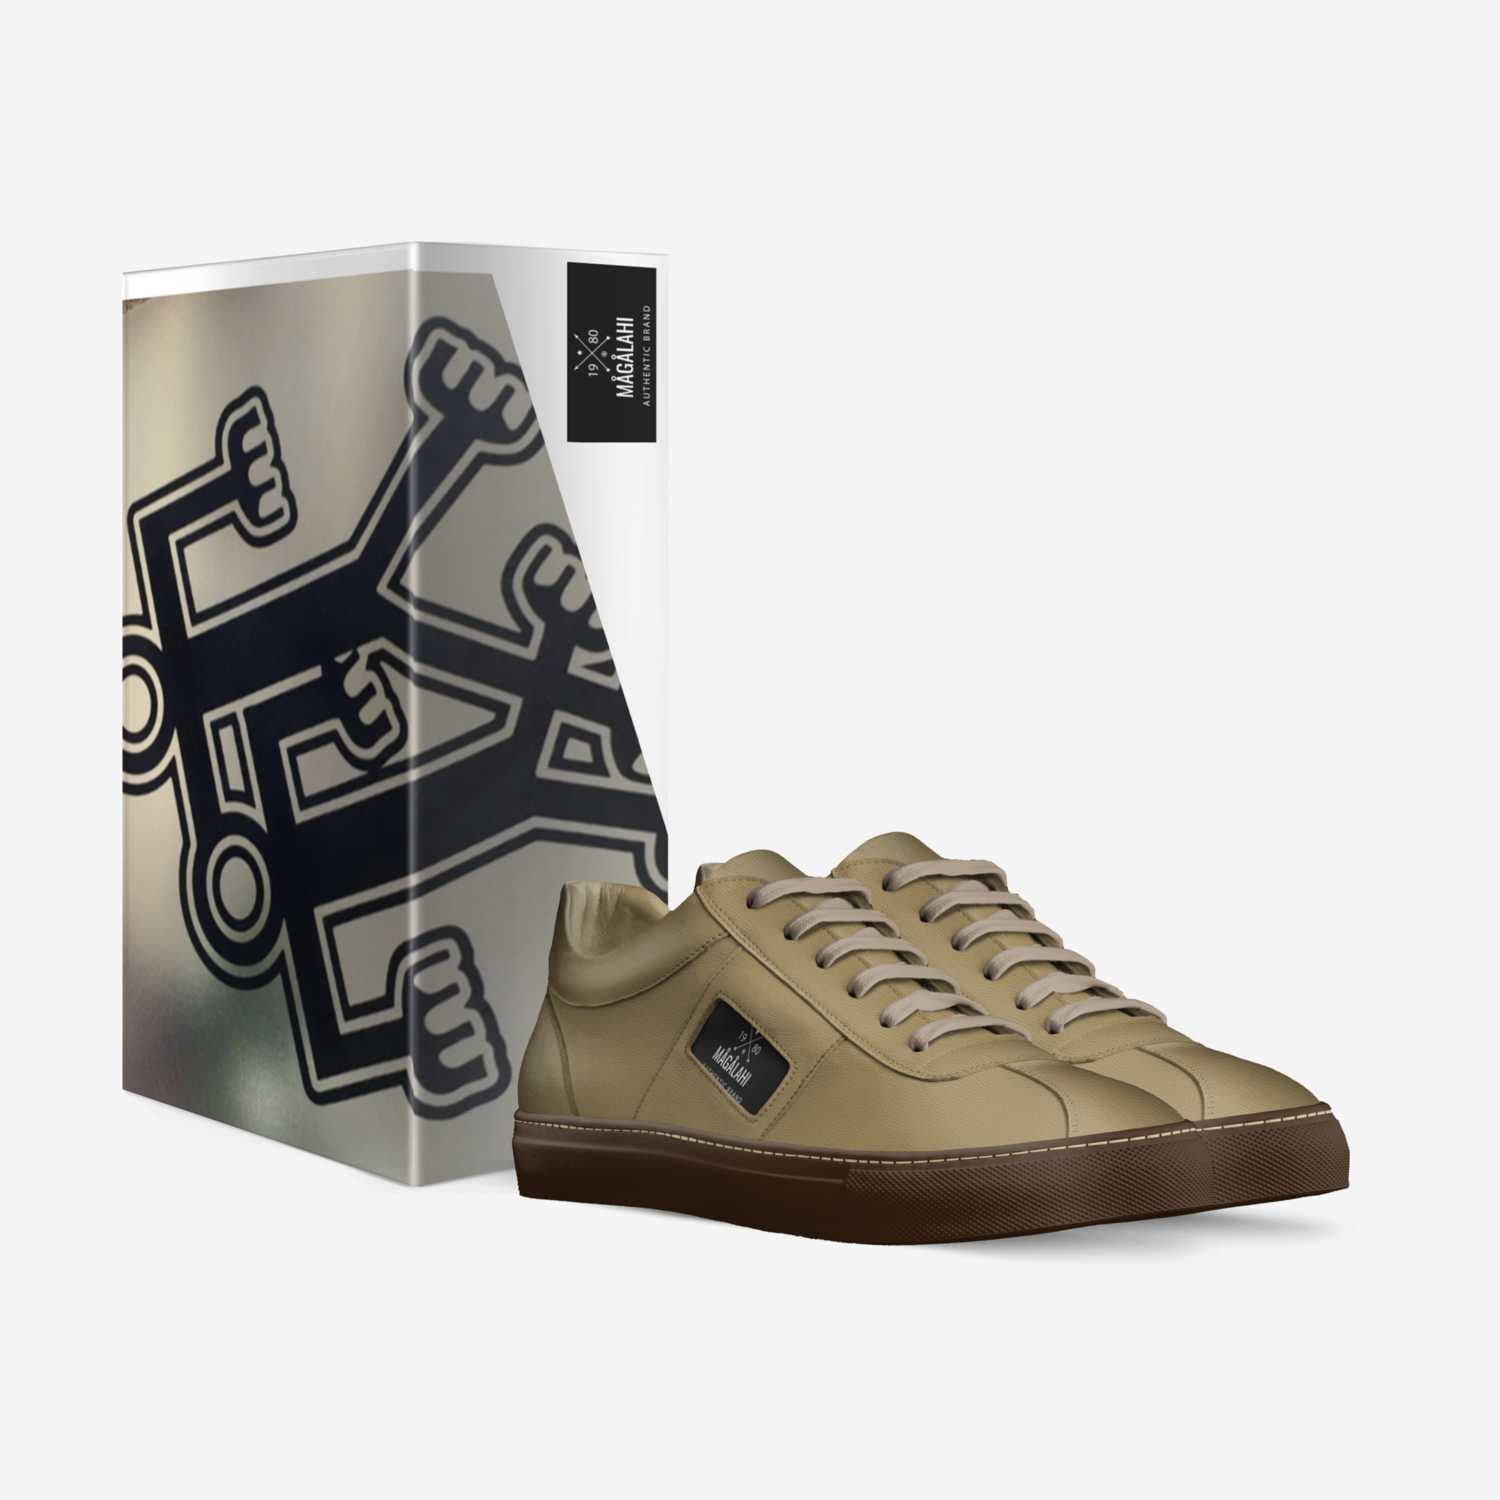 MÅGÅLAHI  custom made in Italy shoes by Franklin Diaz | Box view